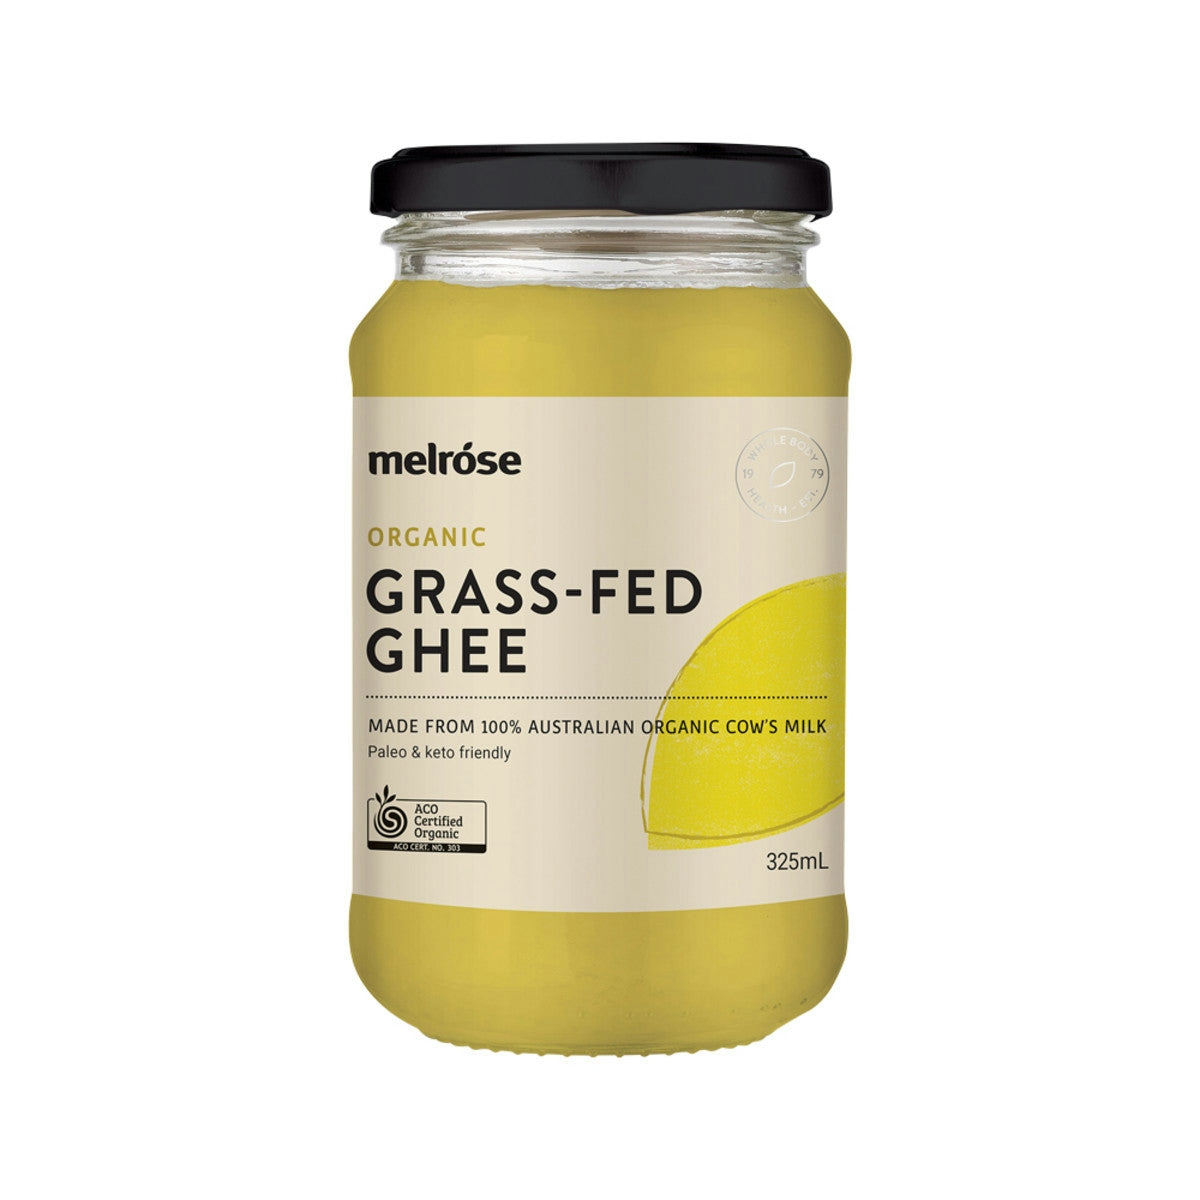 image of Melrose Organic Grass-Fed Ghee 325ml on white background